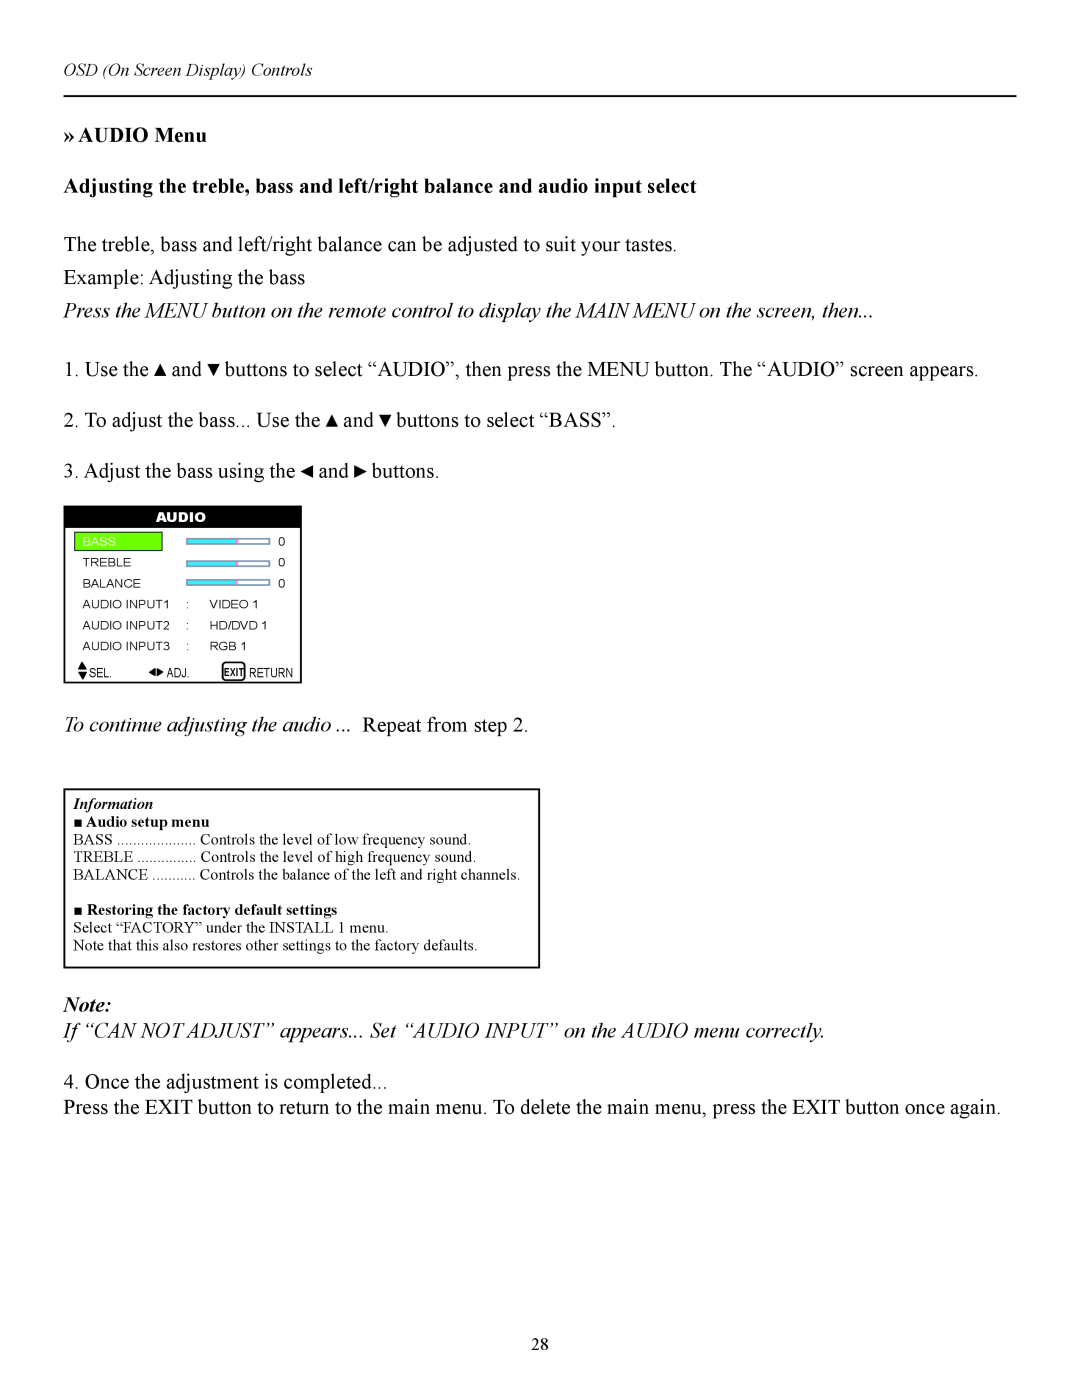 Runco CW-42i manual » AUDIO Menu, To continue adjusting the audio ... Repeat from step, Audio setup menu 